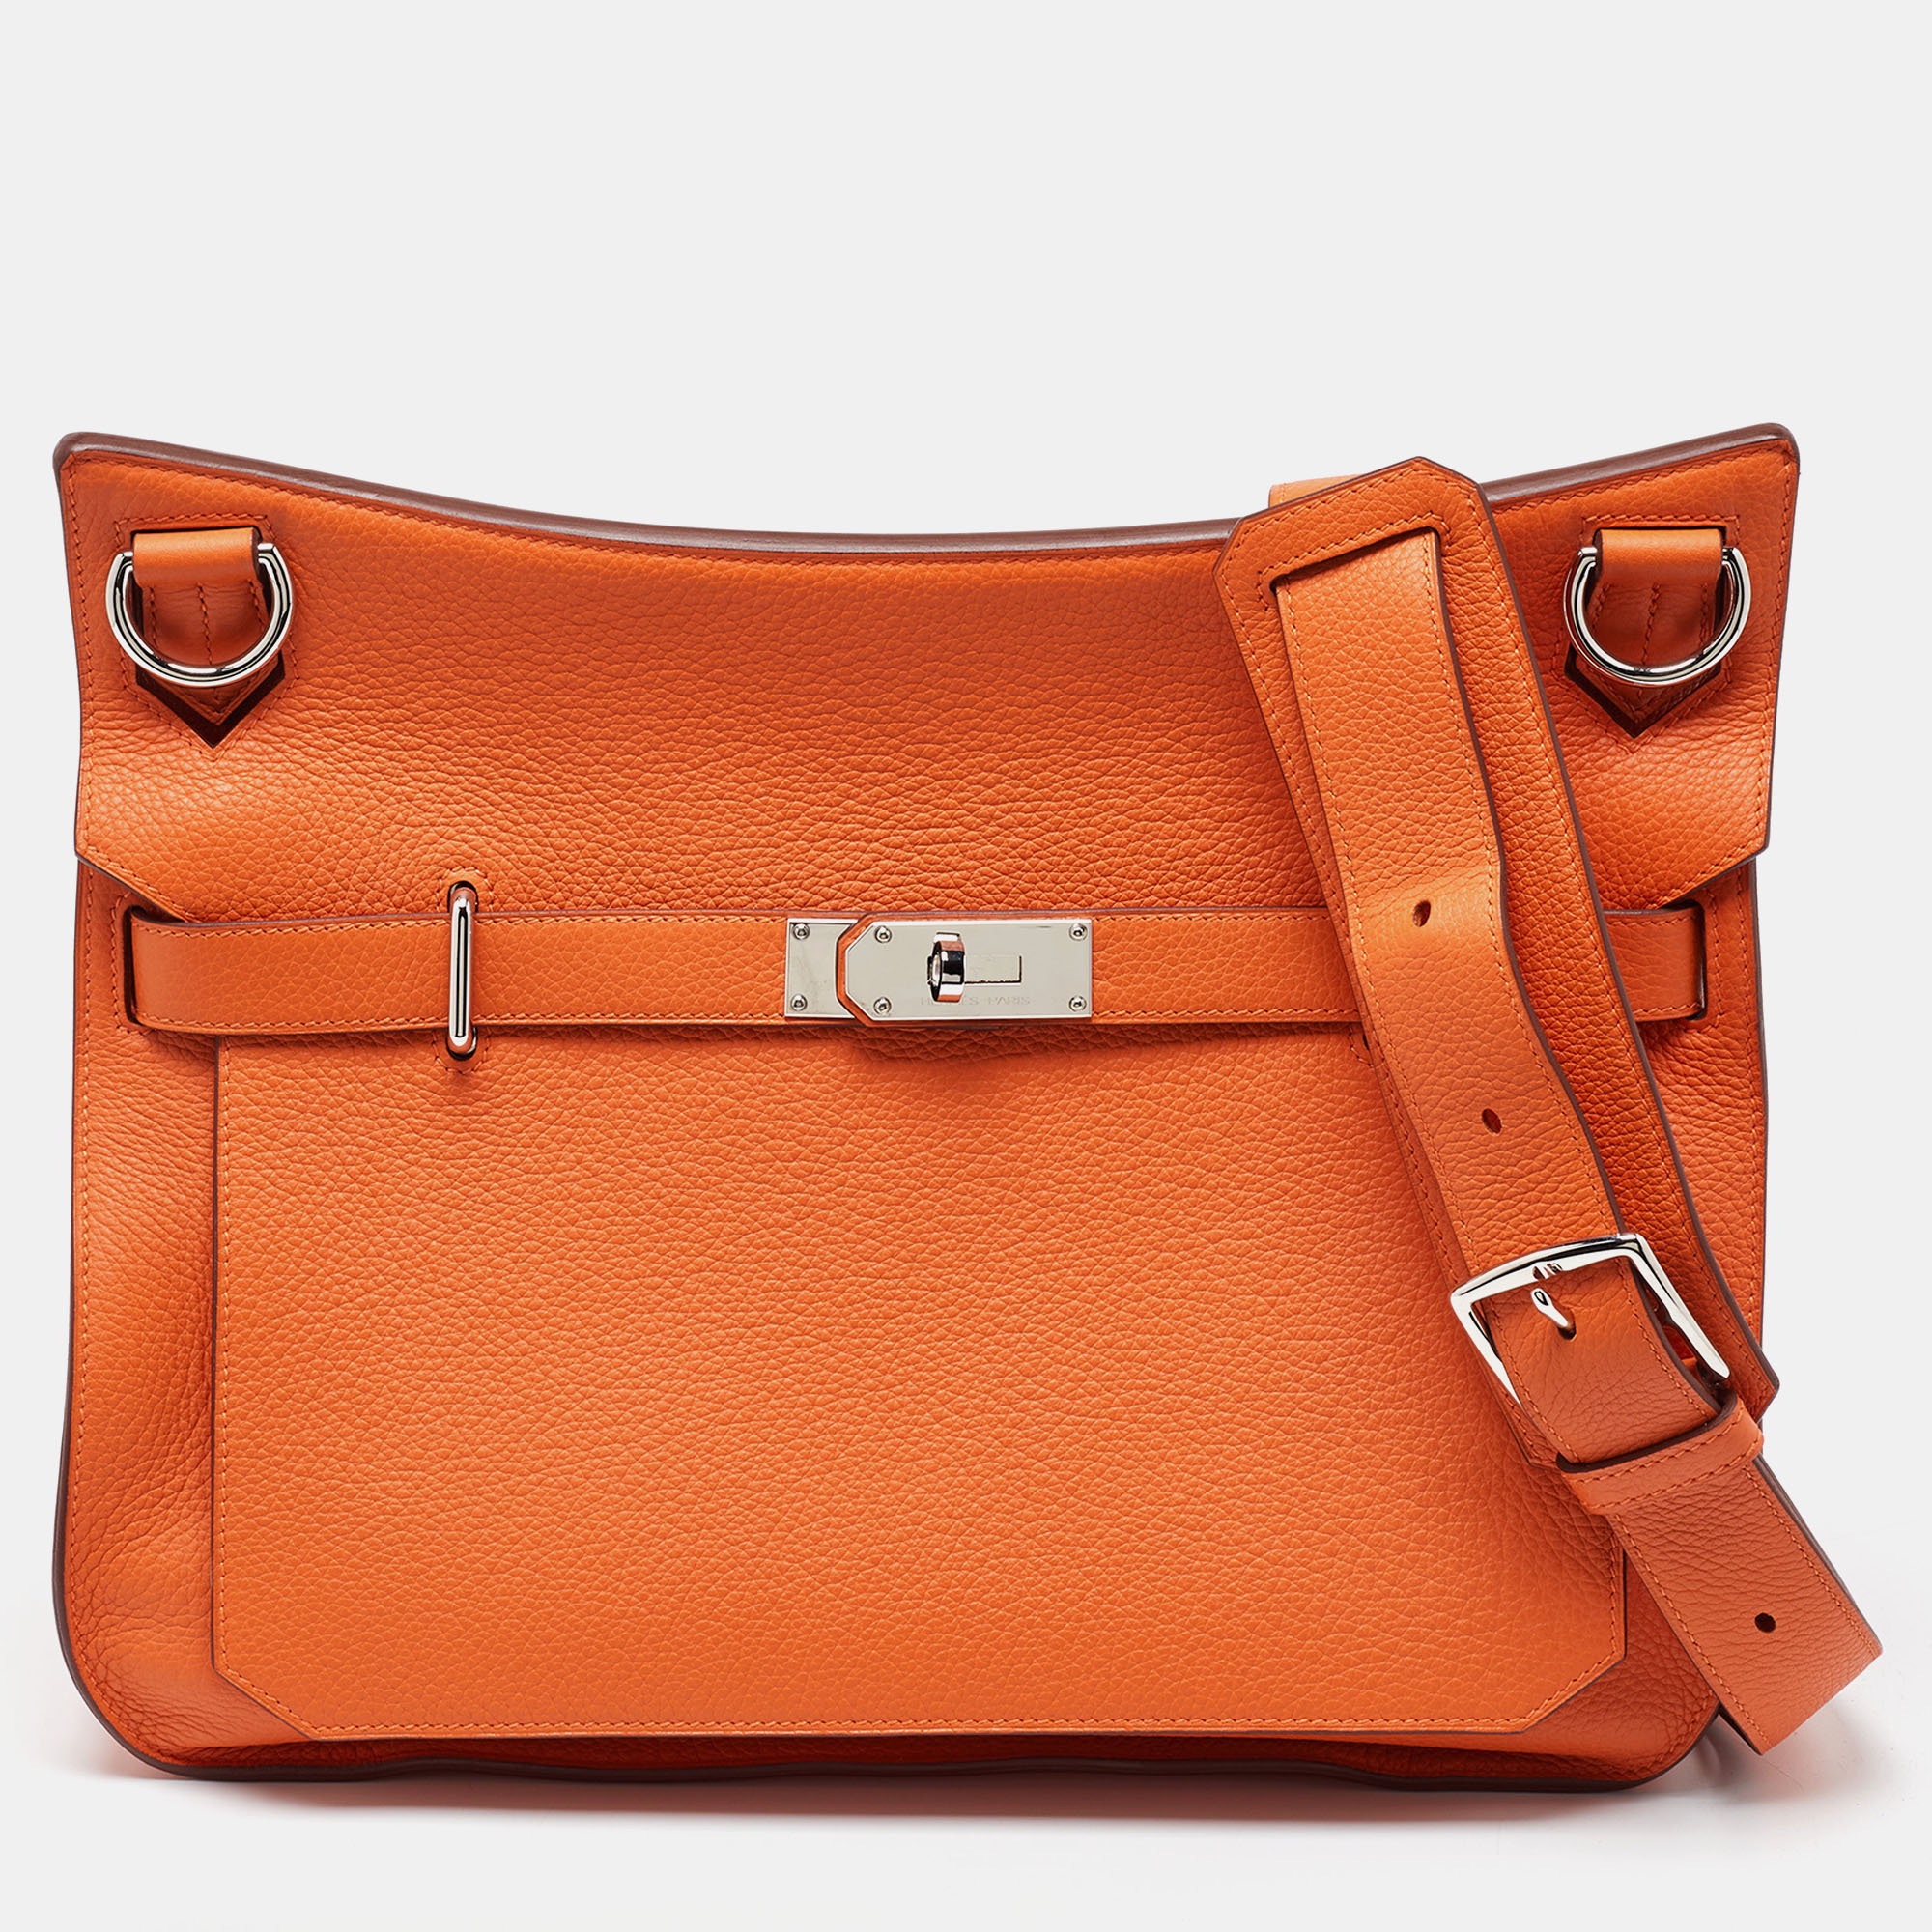 Hermes herm&egrave;s orange togo leather palladium finish jypsiere 37 bag